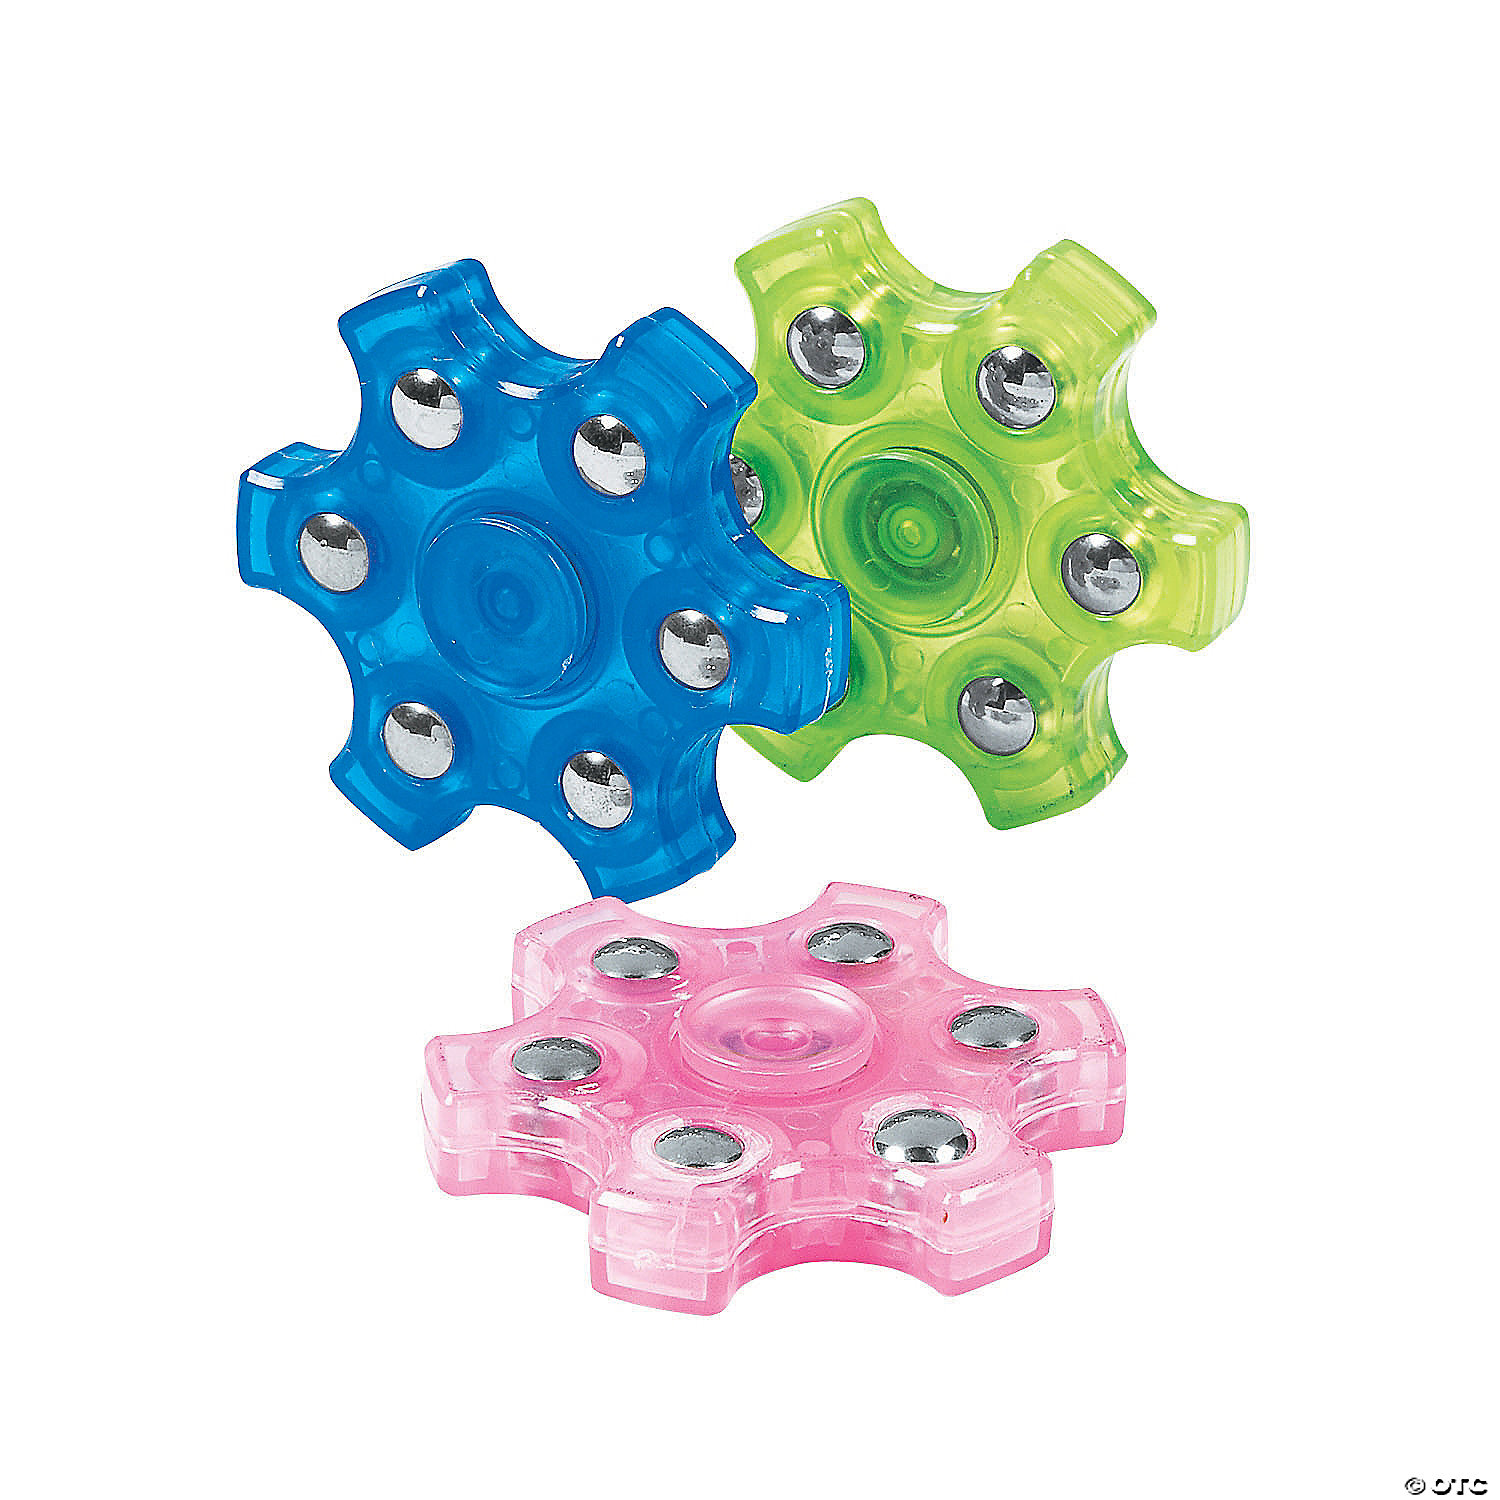 6 ASST GLOW IN THE DARK FIDGET FINGER SPINNERS stress relieve spinner toy SPIN 